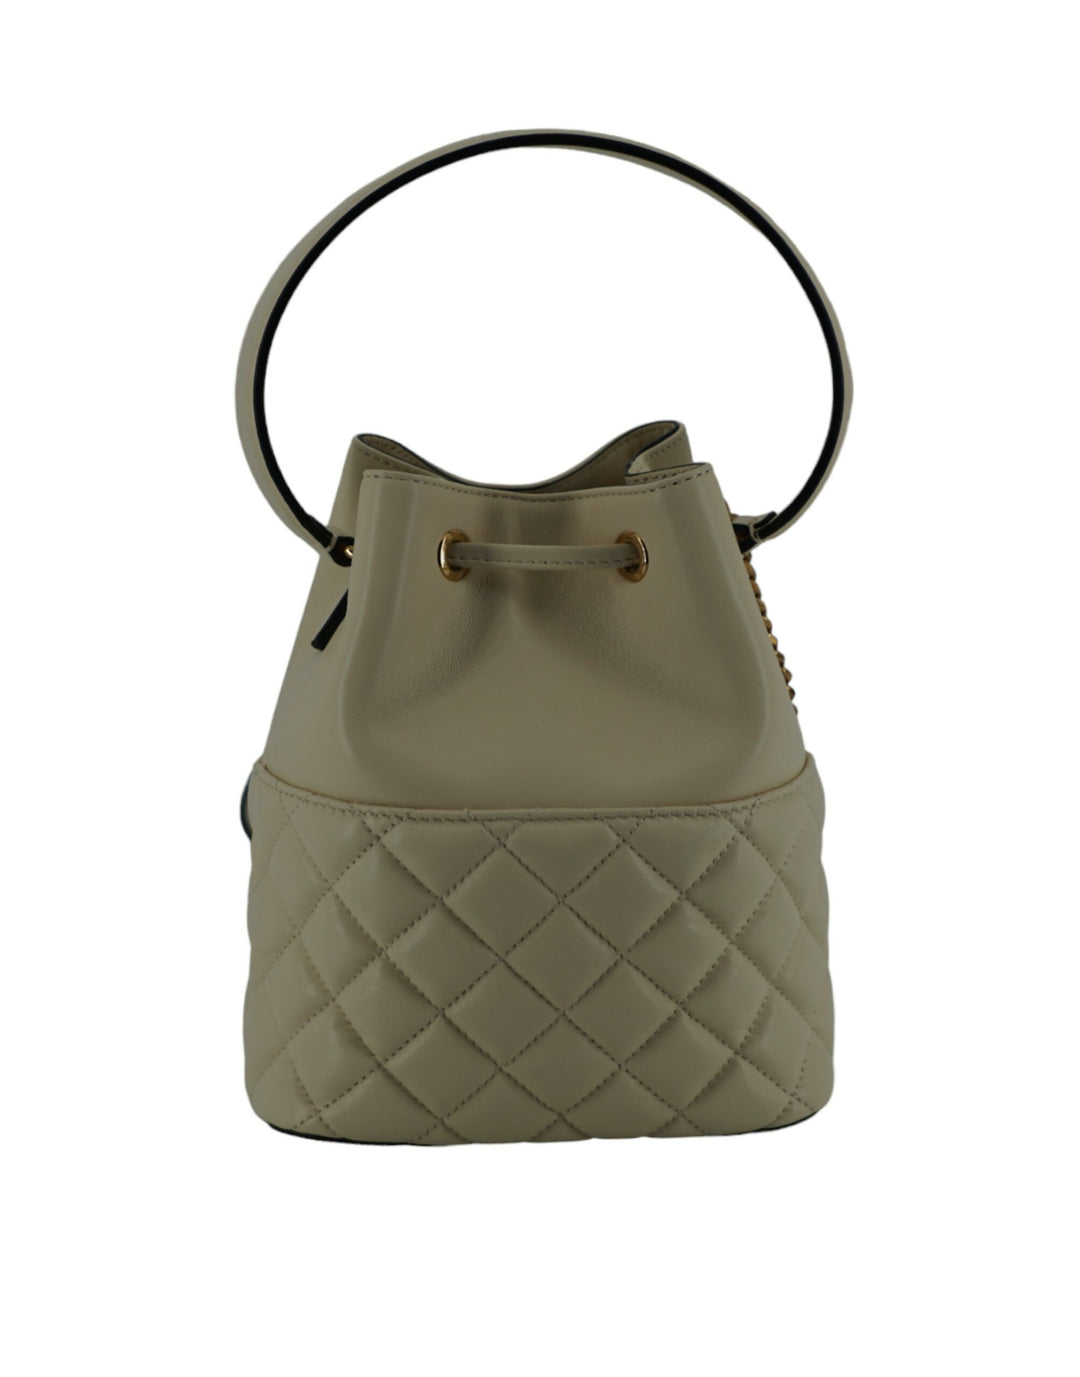 Versace Elegant Small White Leather Bucket Shoulder Bag